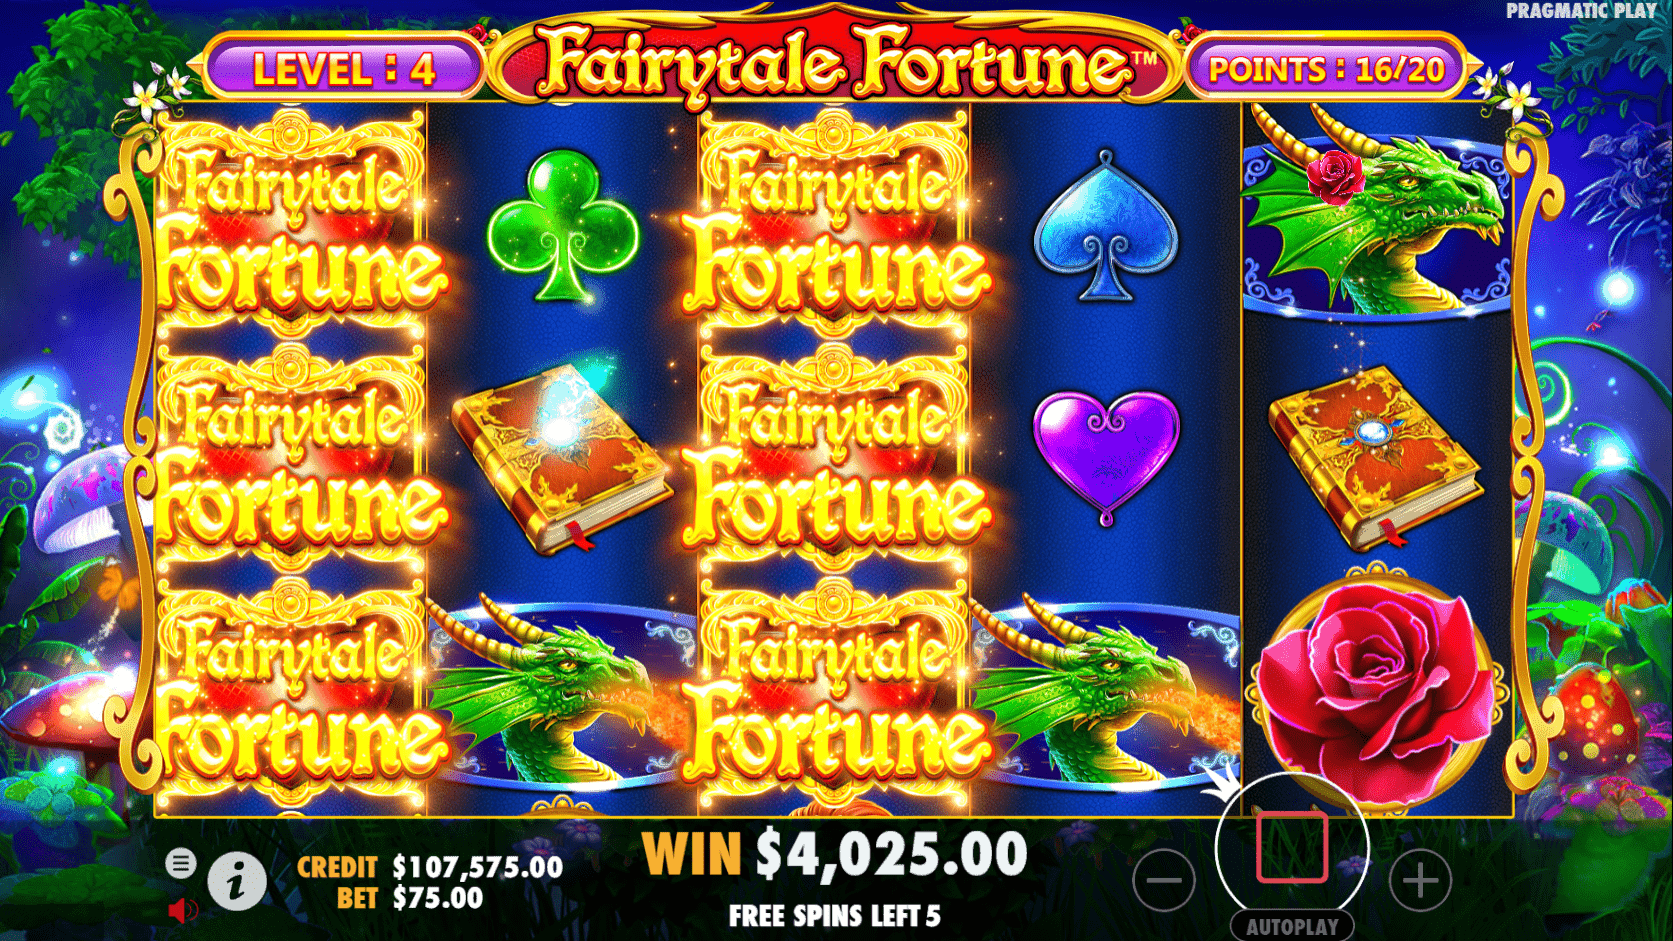 Fairytale Fortune By Pragmatic Play